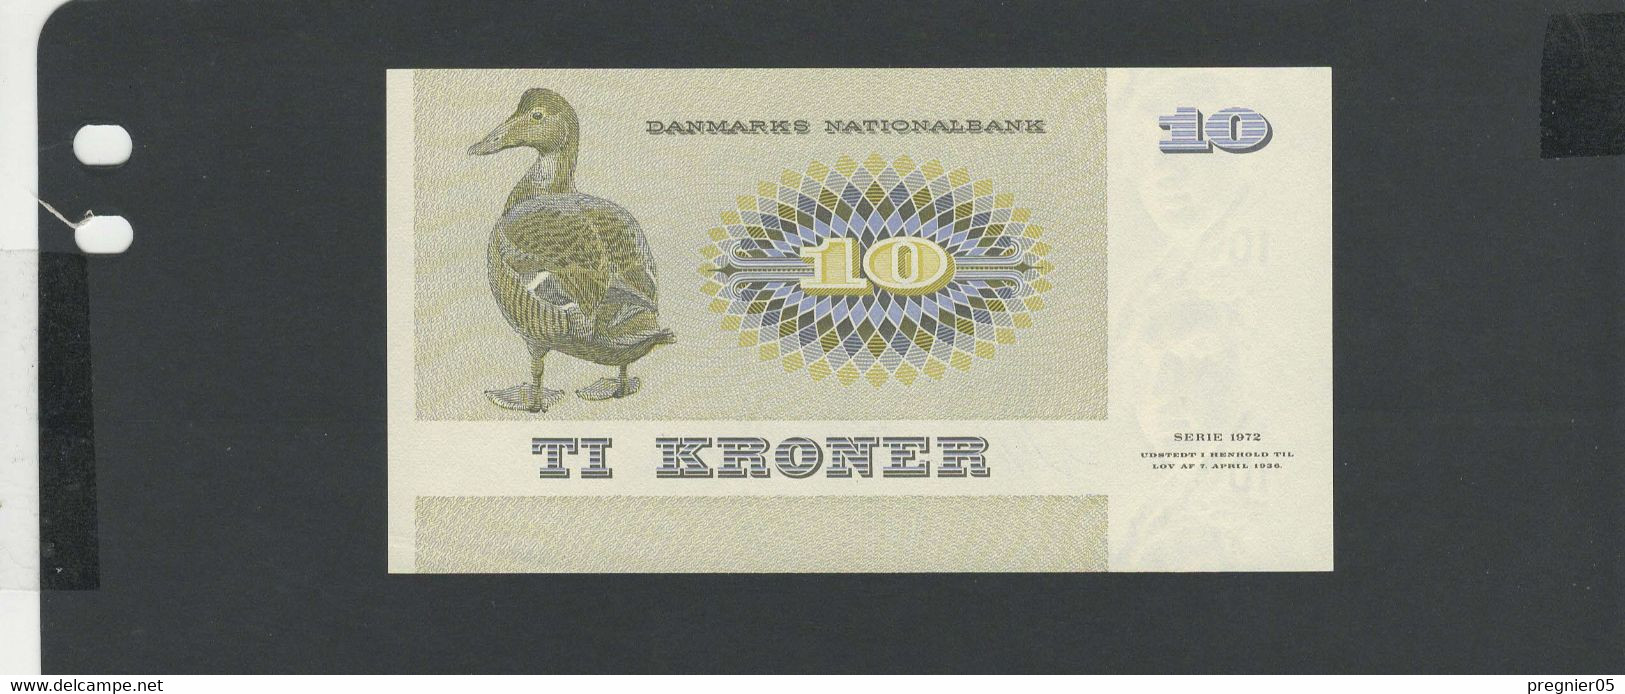 DANEMARK - Billet 10 Kroner 1972 NEUF/UNC Pick-48a - Danemark